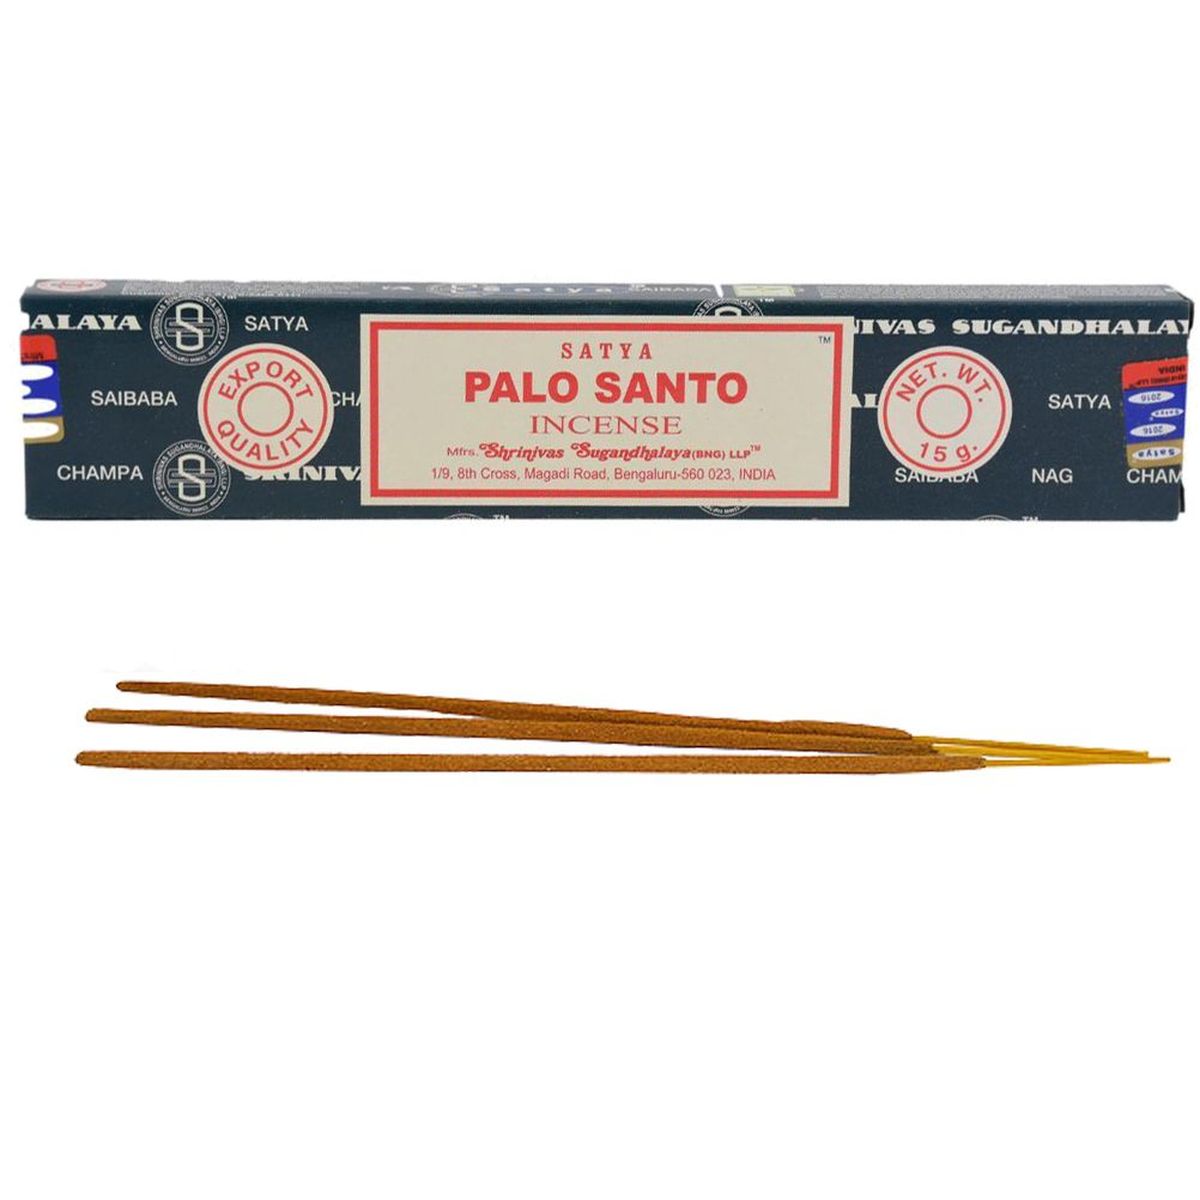 Incense Satya Nag Champa Palo Santo 15 grams or about 15 Sticks